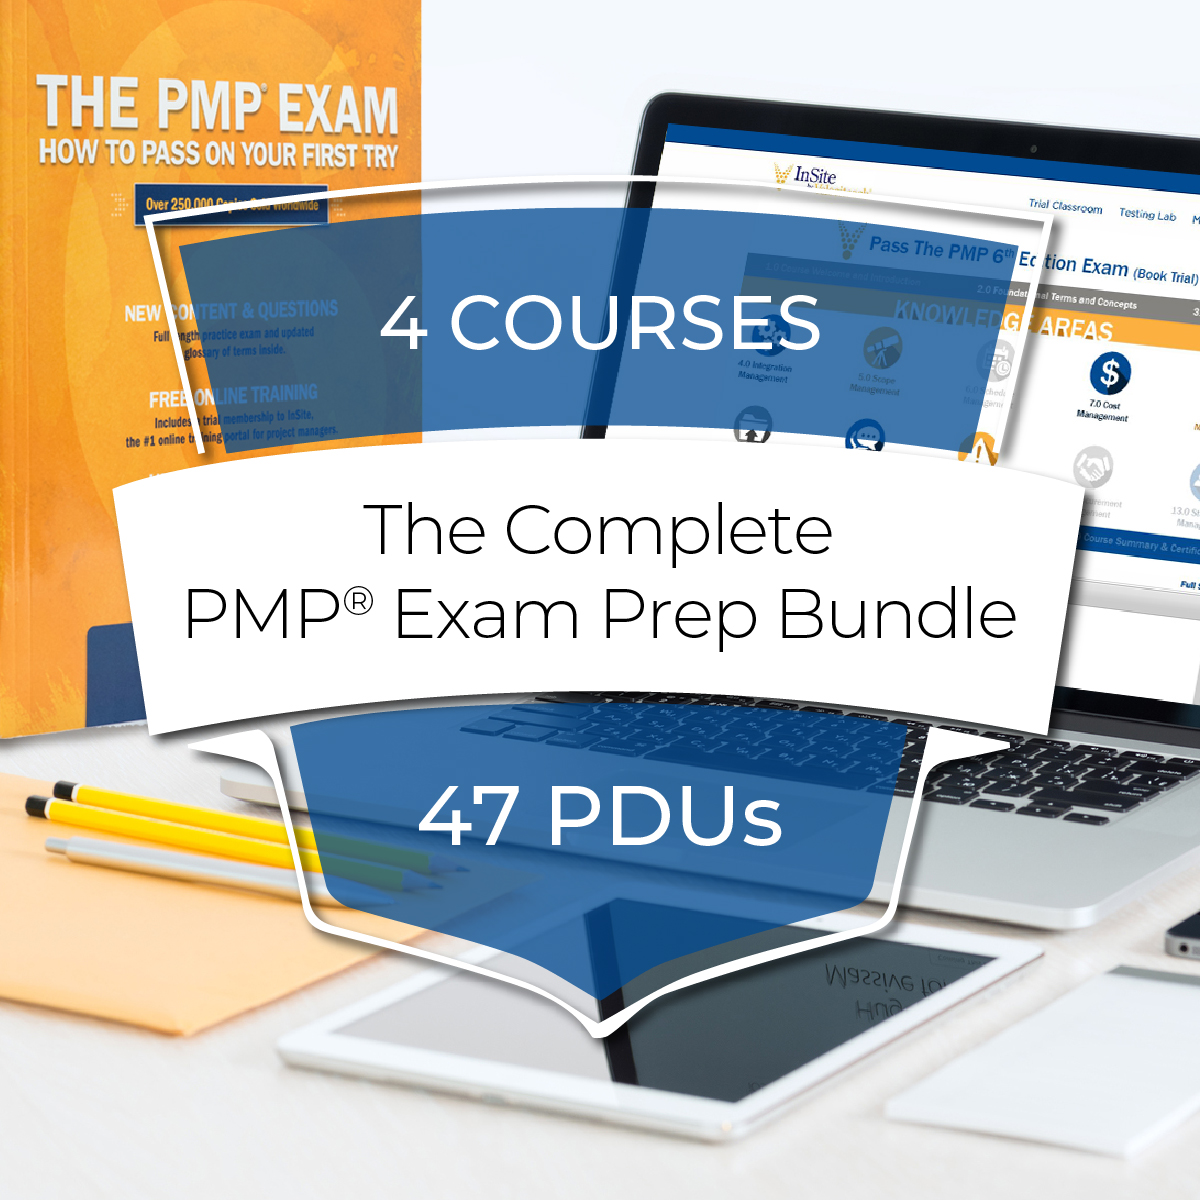 <p>The Complete PMP® Exam Prep Bundle</p>
